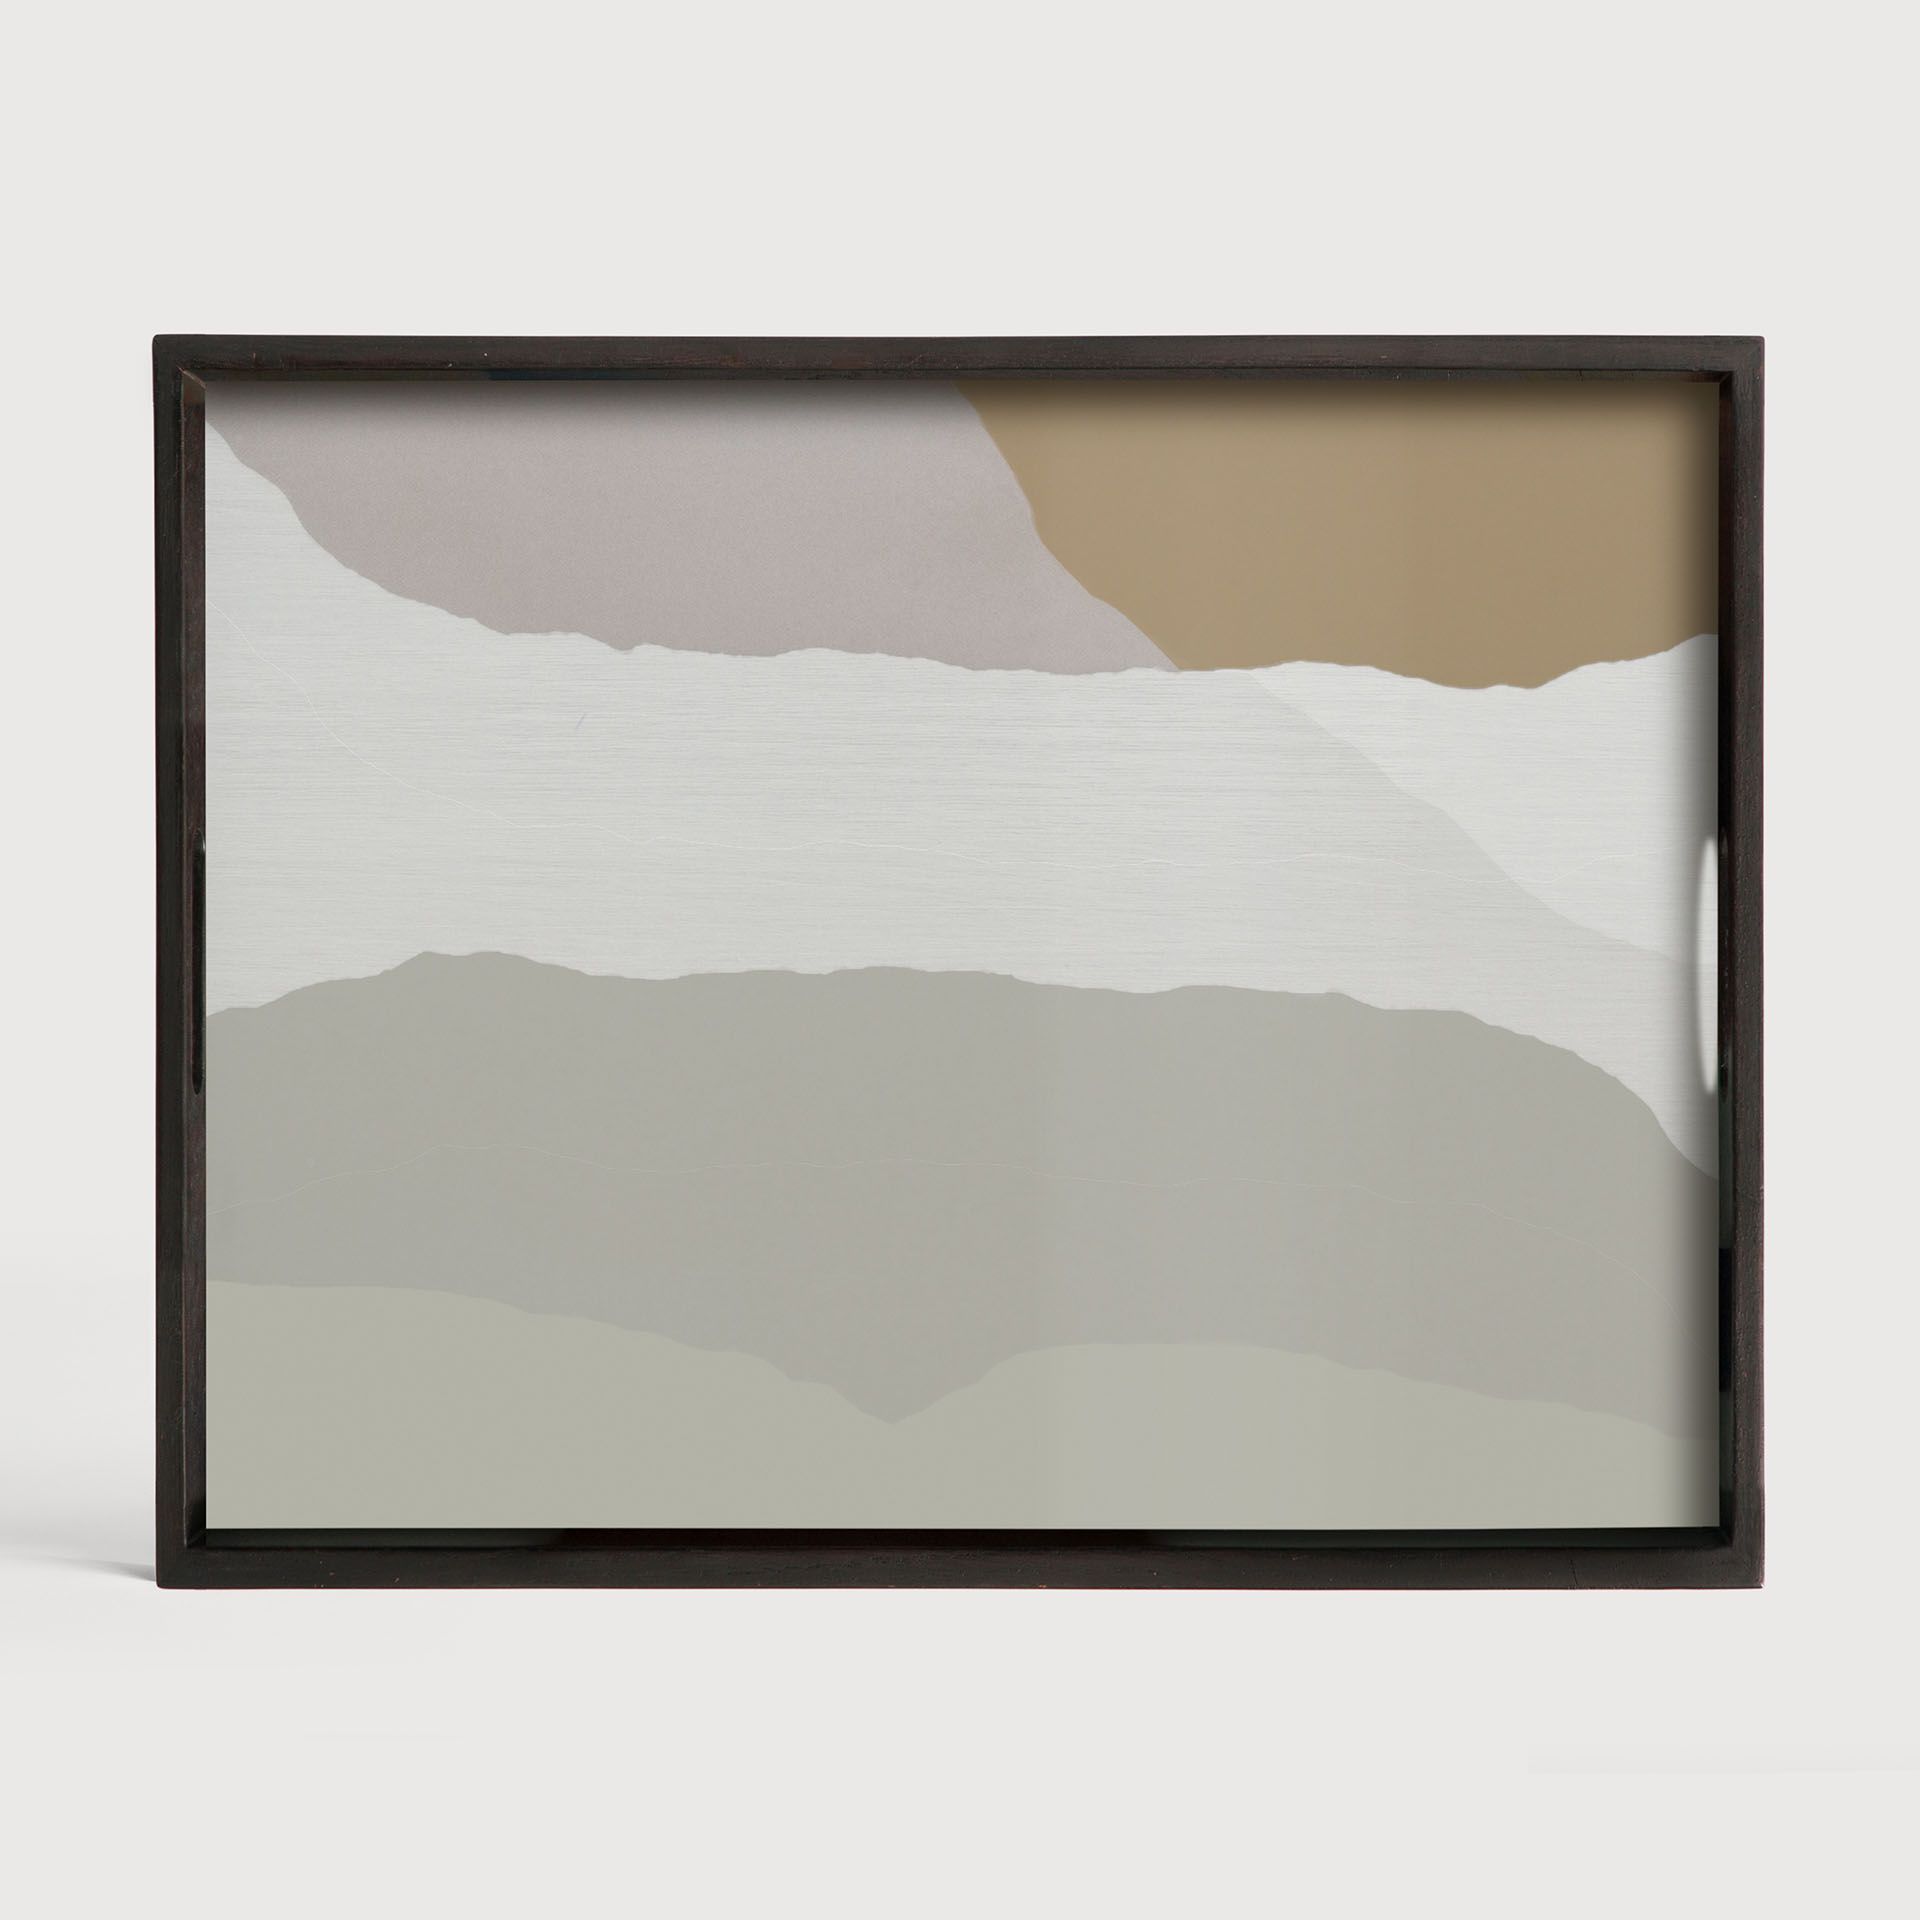 [20463*] Sand Wabi Sabi glass tray - rectangular